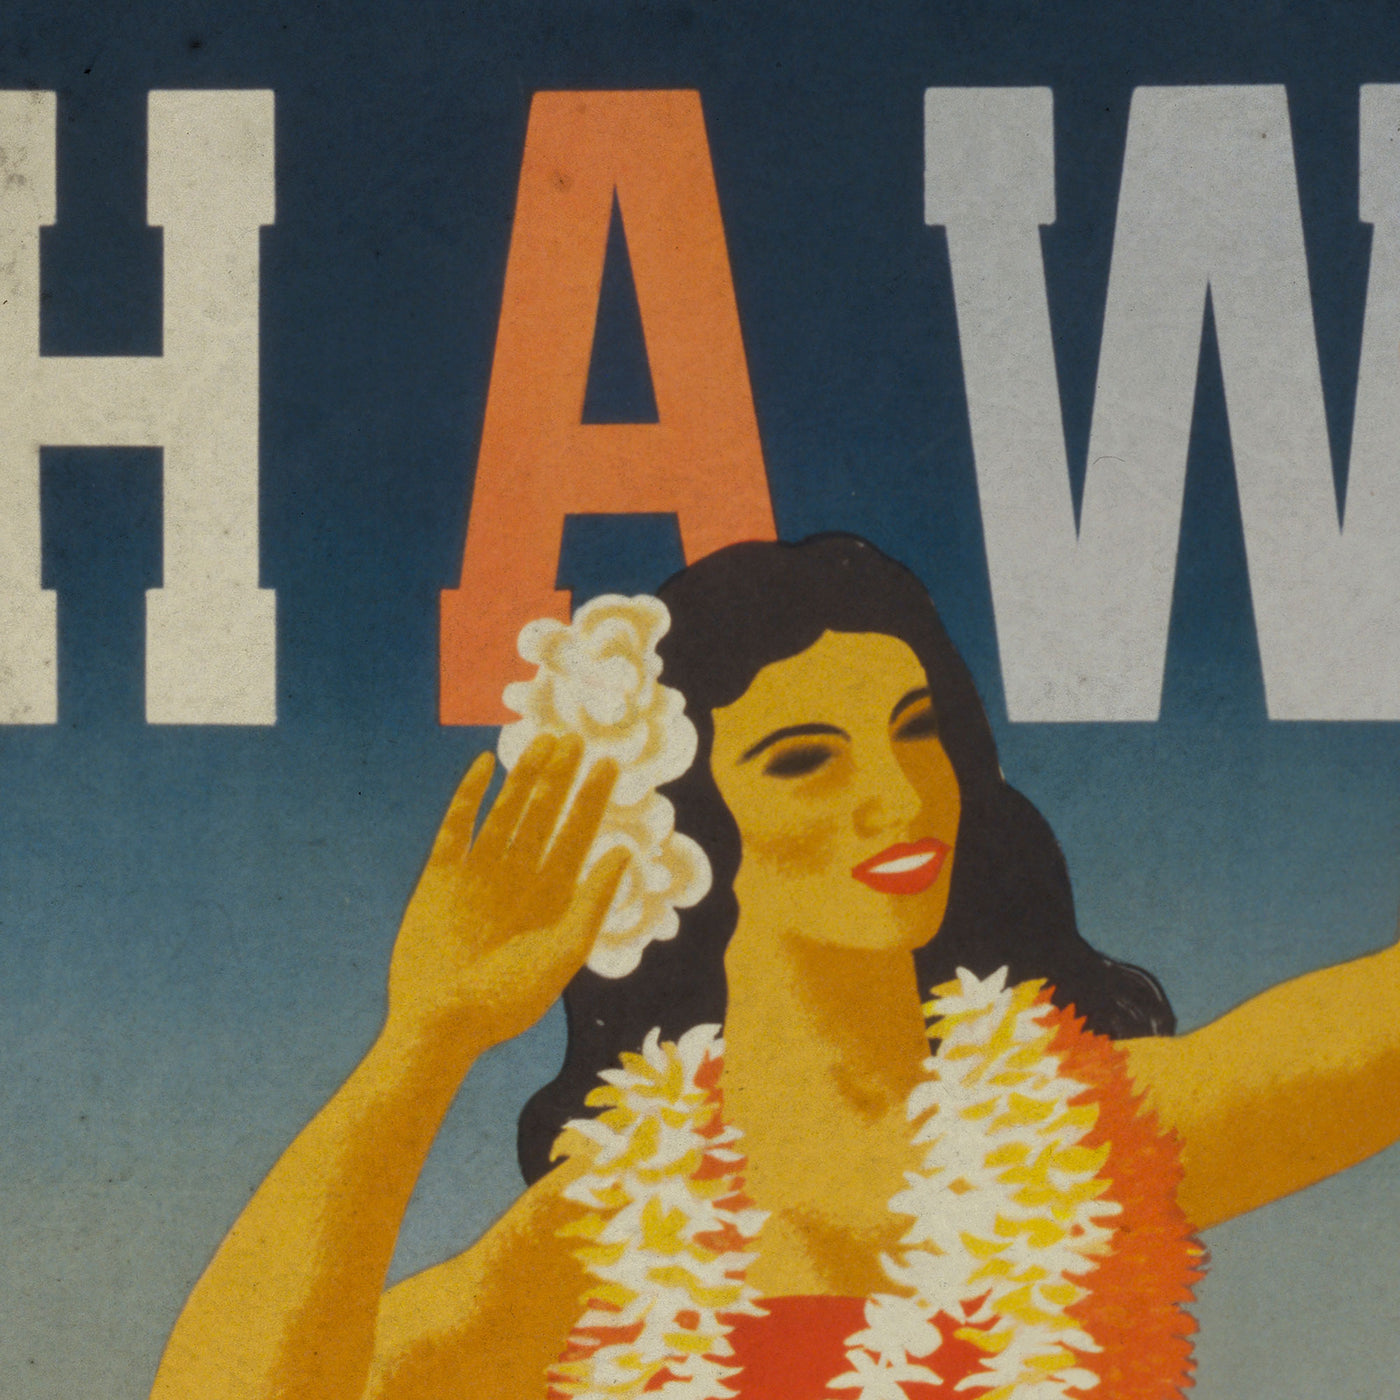 Hawaii vintage travel poster wall art. 